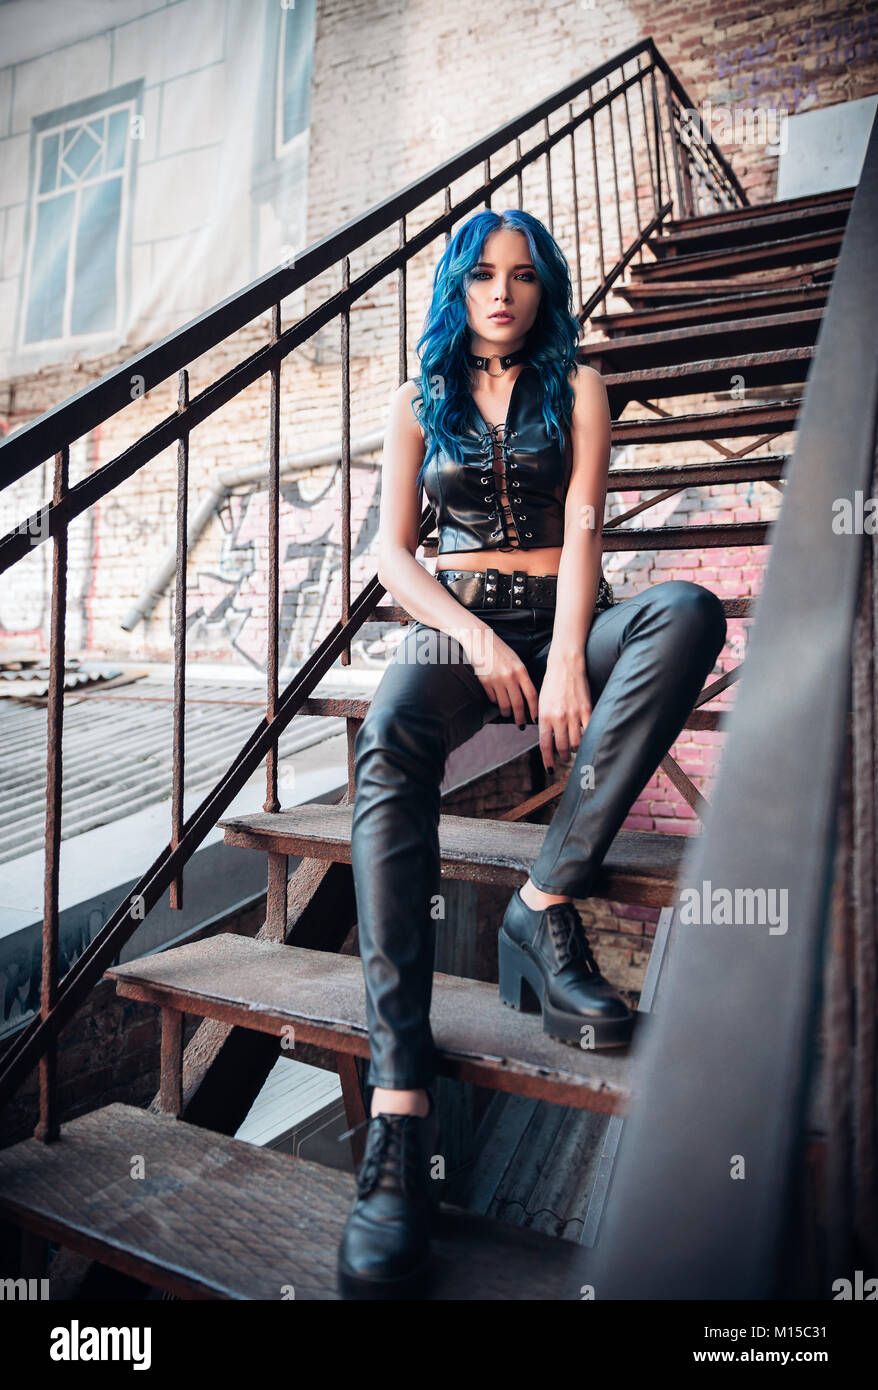 https://c8.alamy.com/comp/M15C31/pretty-blue-haired-rock-girl-informal-model-dressed-in-the-black-leather-M15C31.jpg